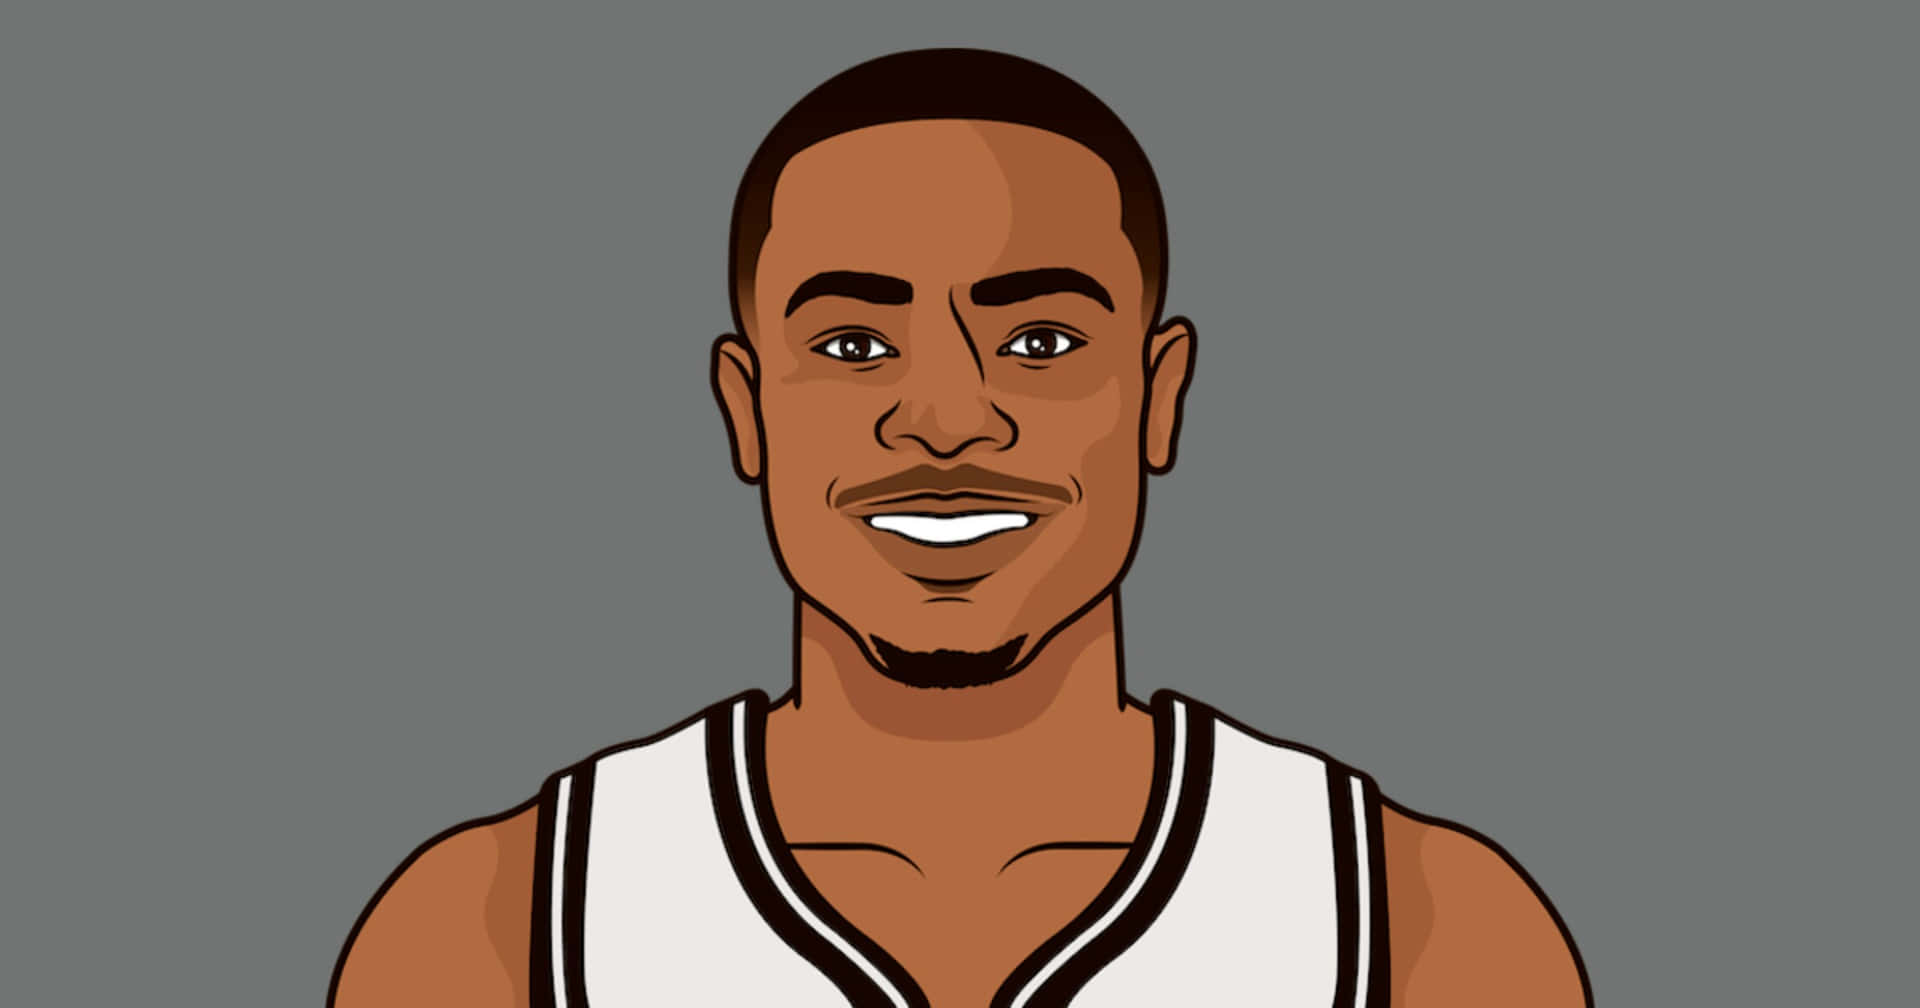 Animated Basketball Player Portrait Wallpaper